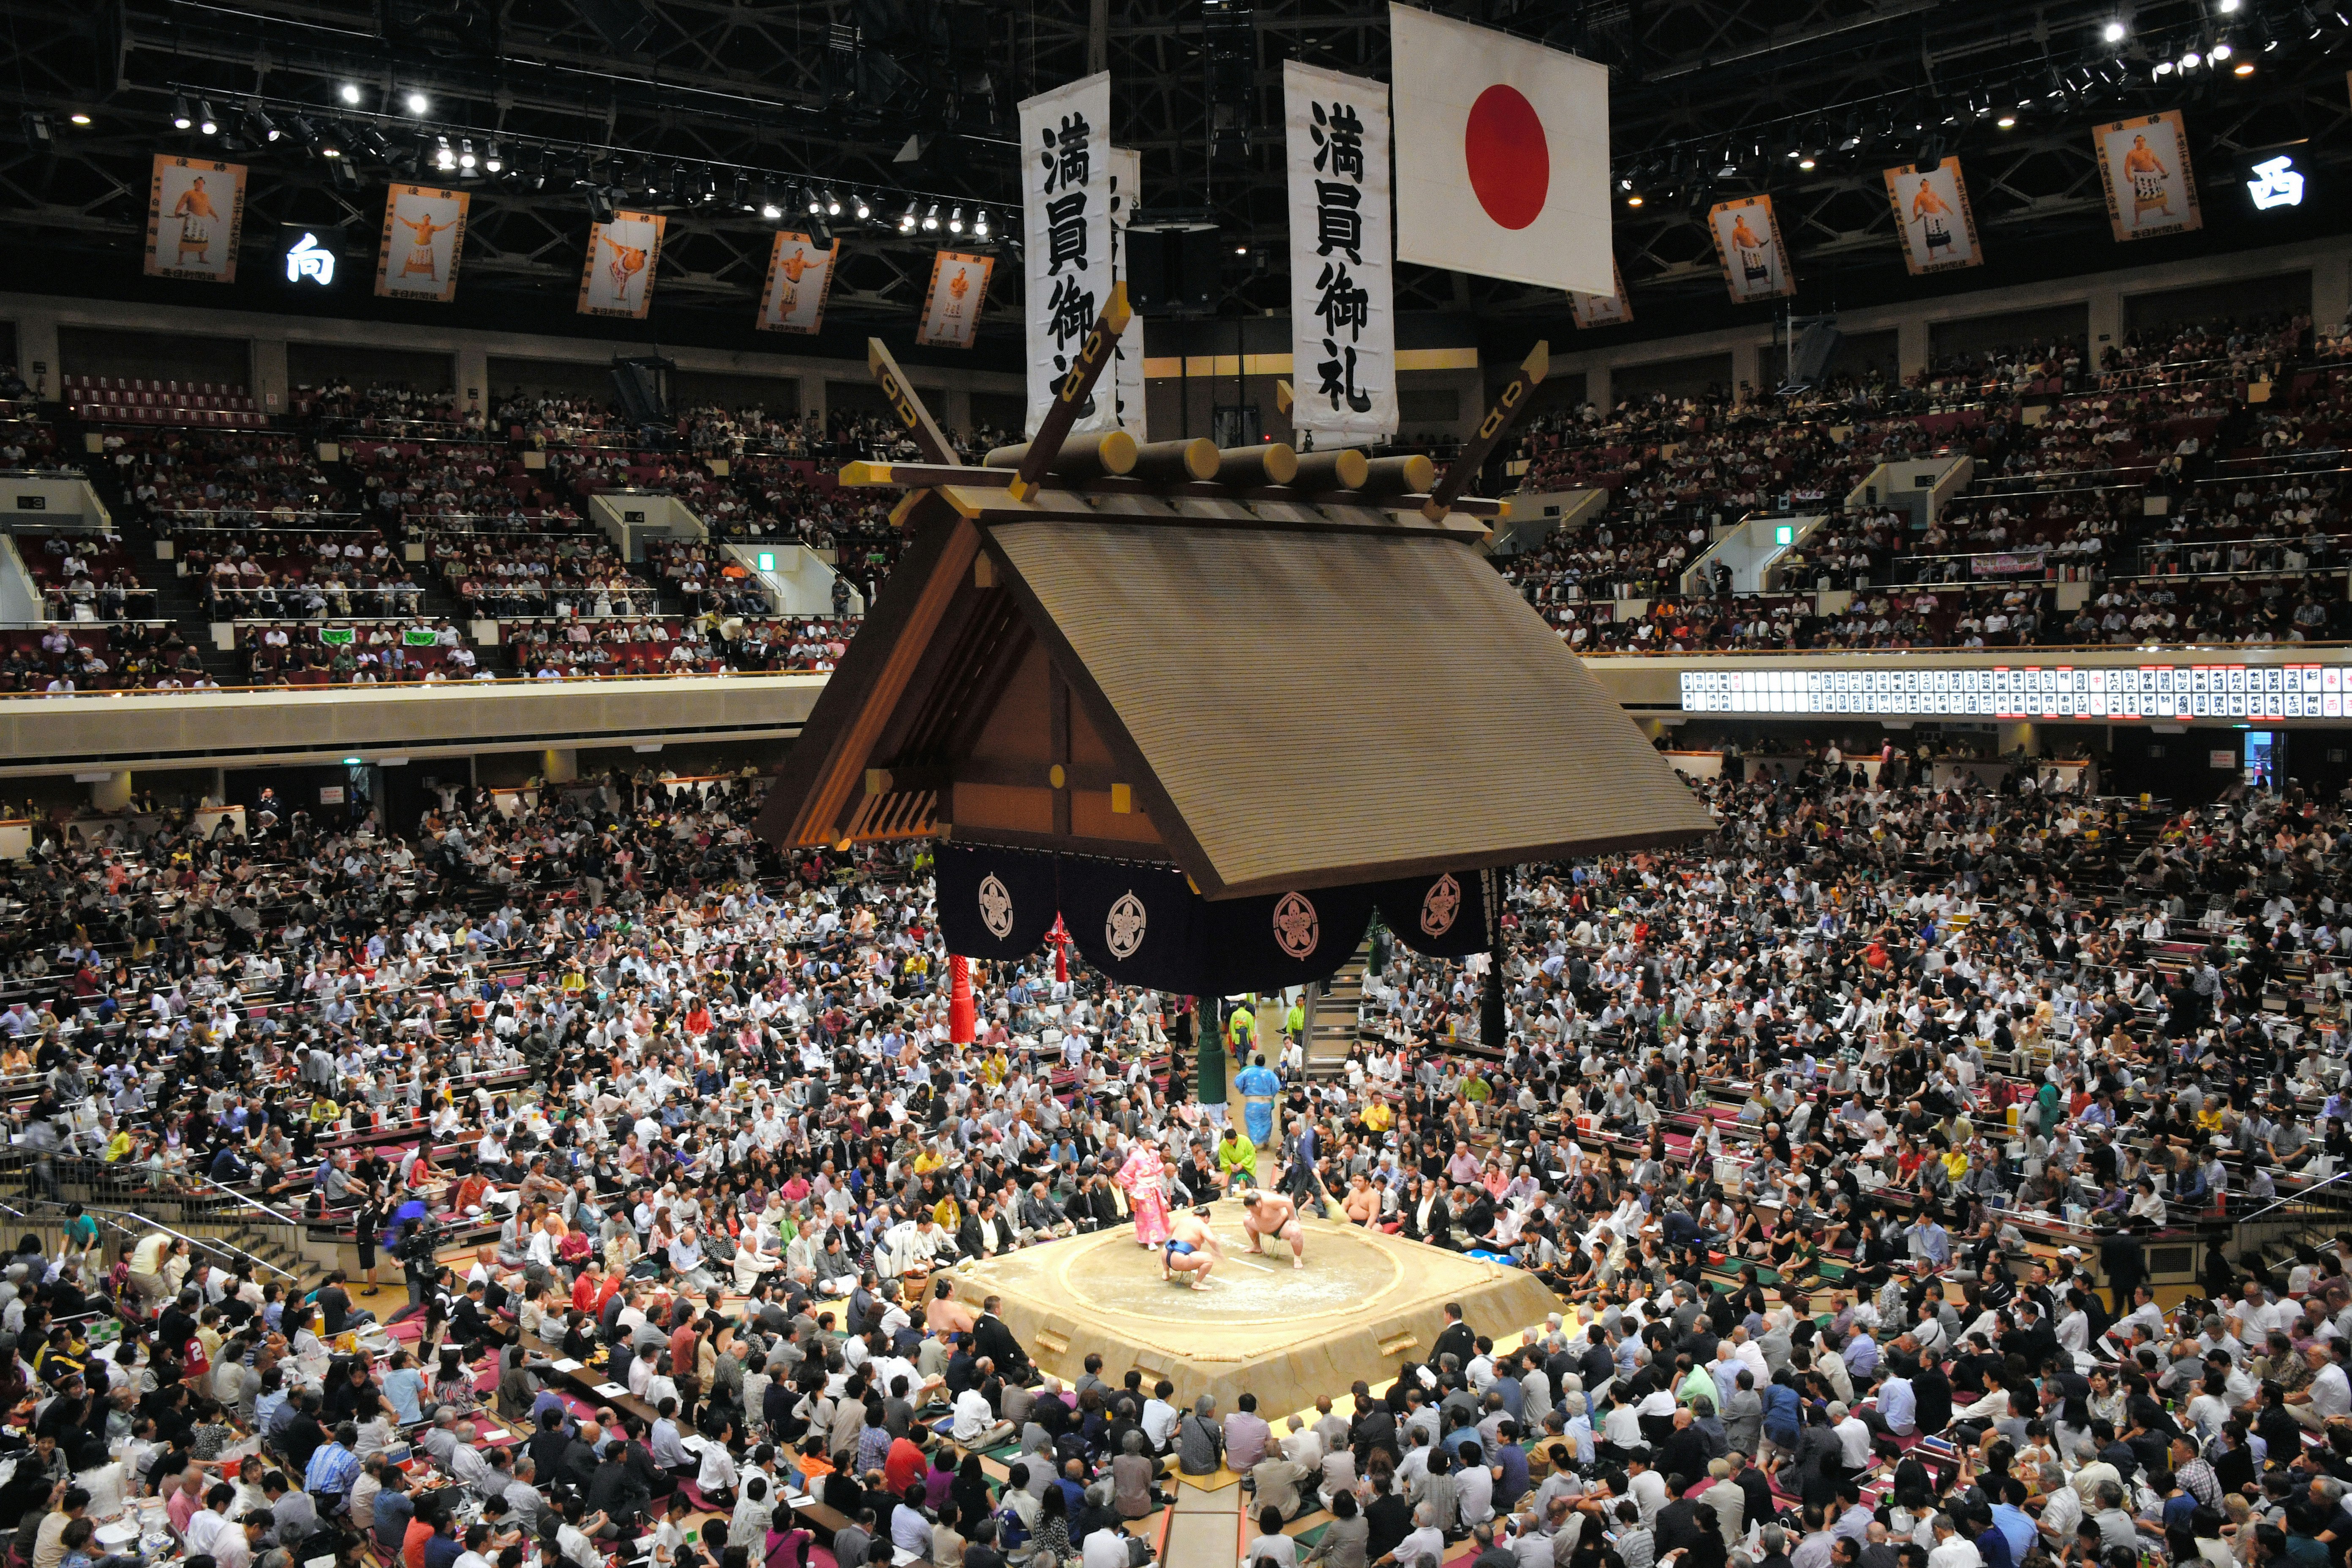 Spectators watch two sumo wrestlers competing at Ryōgoku Kokugikan, Tokyo